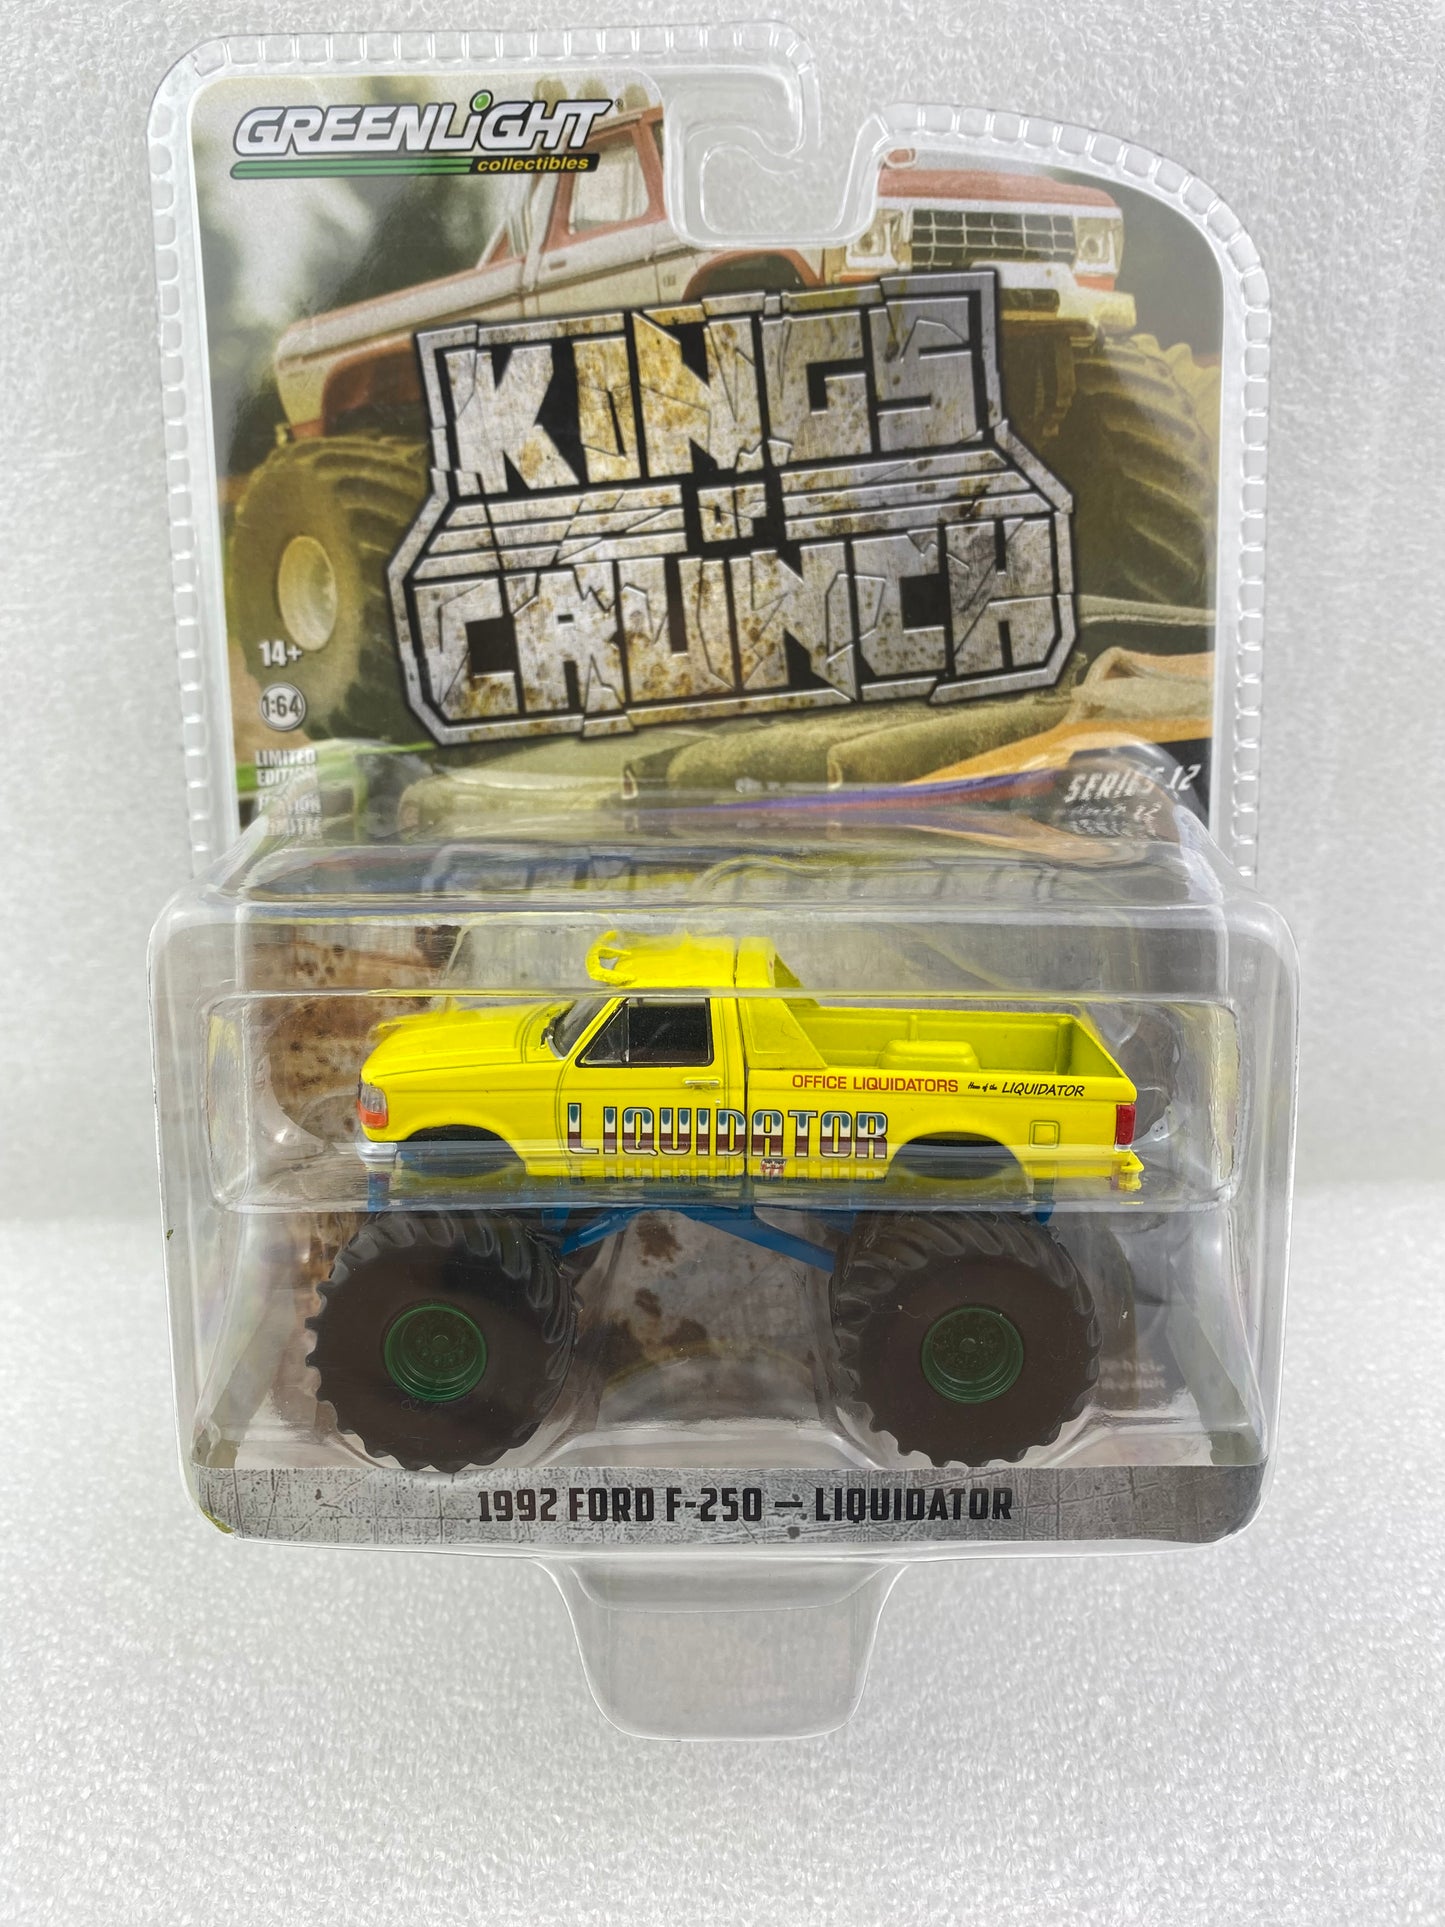 GreenLight Green Machine 1:64 Kings of Crunch Series 12 - Liquidator - 1992 Ford F-250 Monster Truck 49120-F